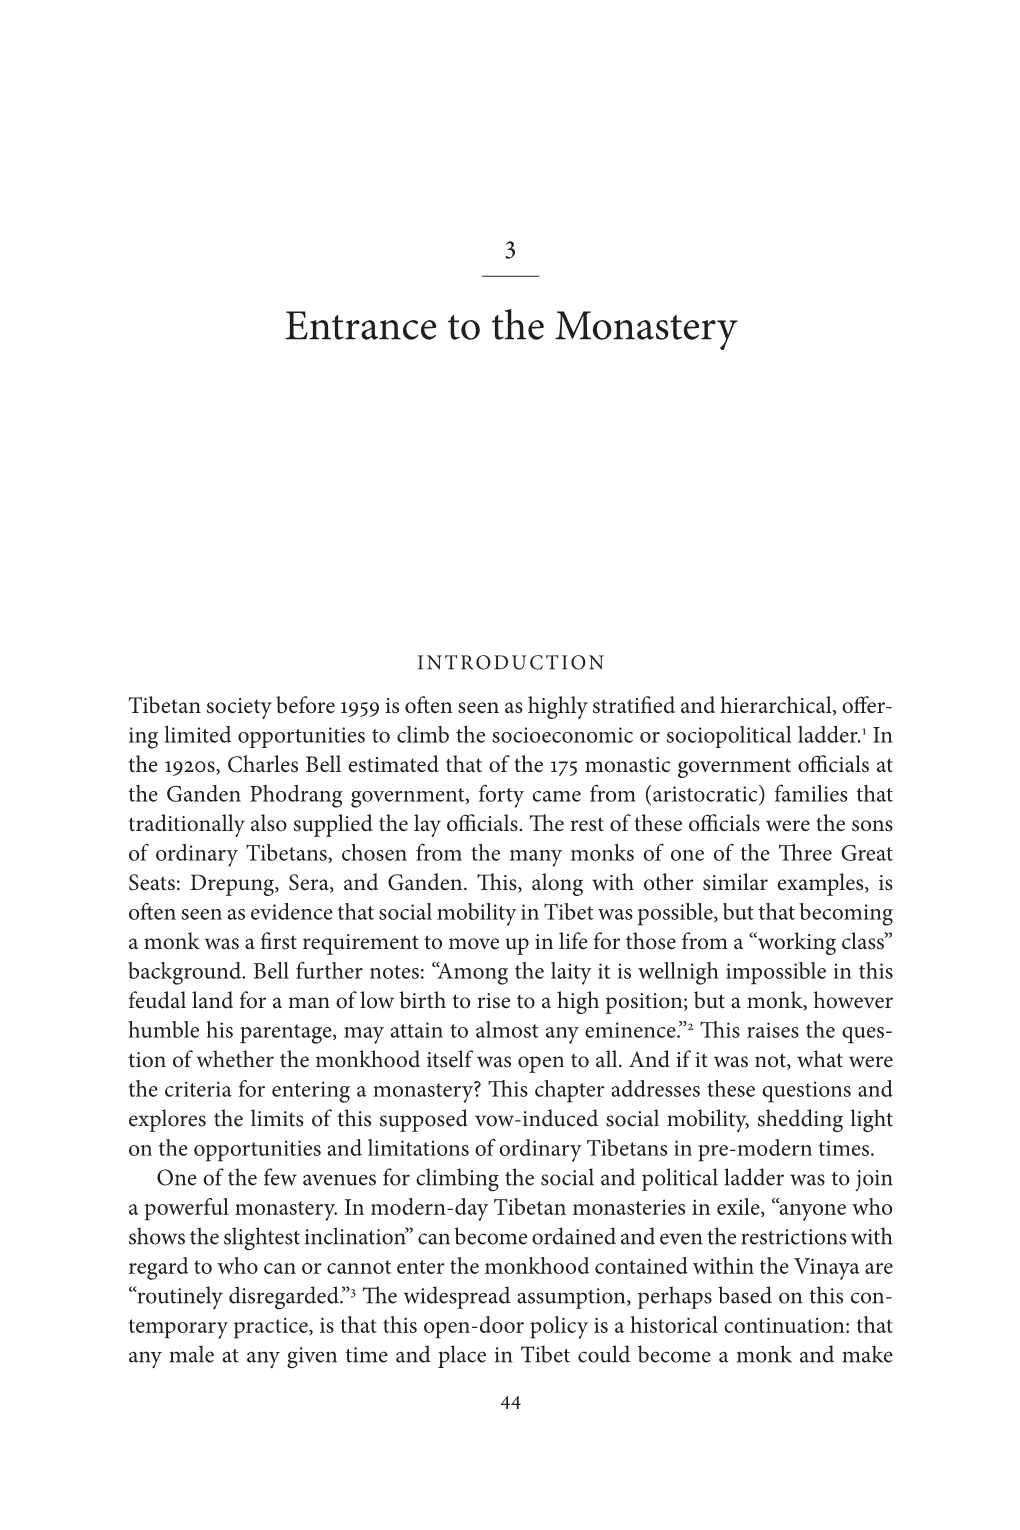 The Monastery Rules: Buddhist Monastic Organization in Pre